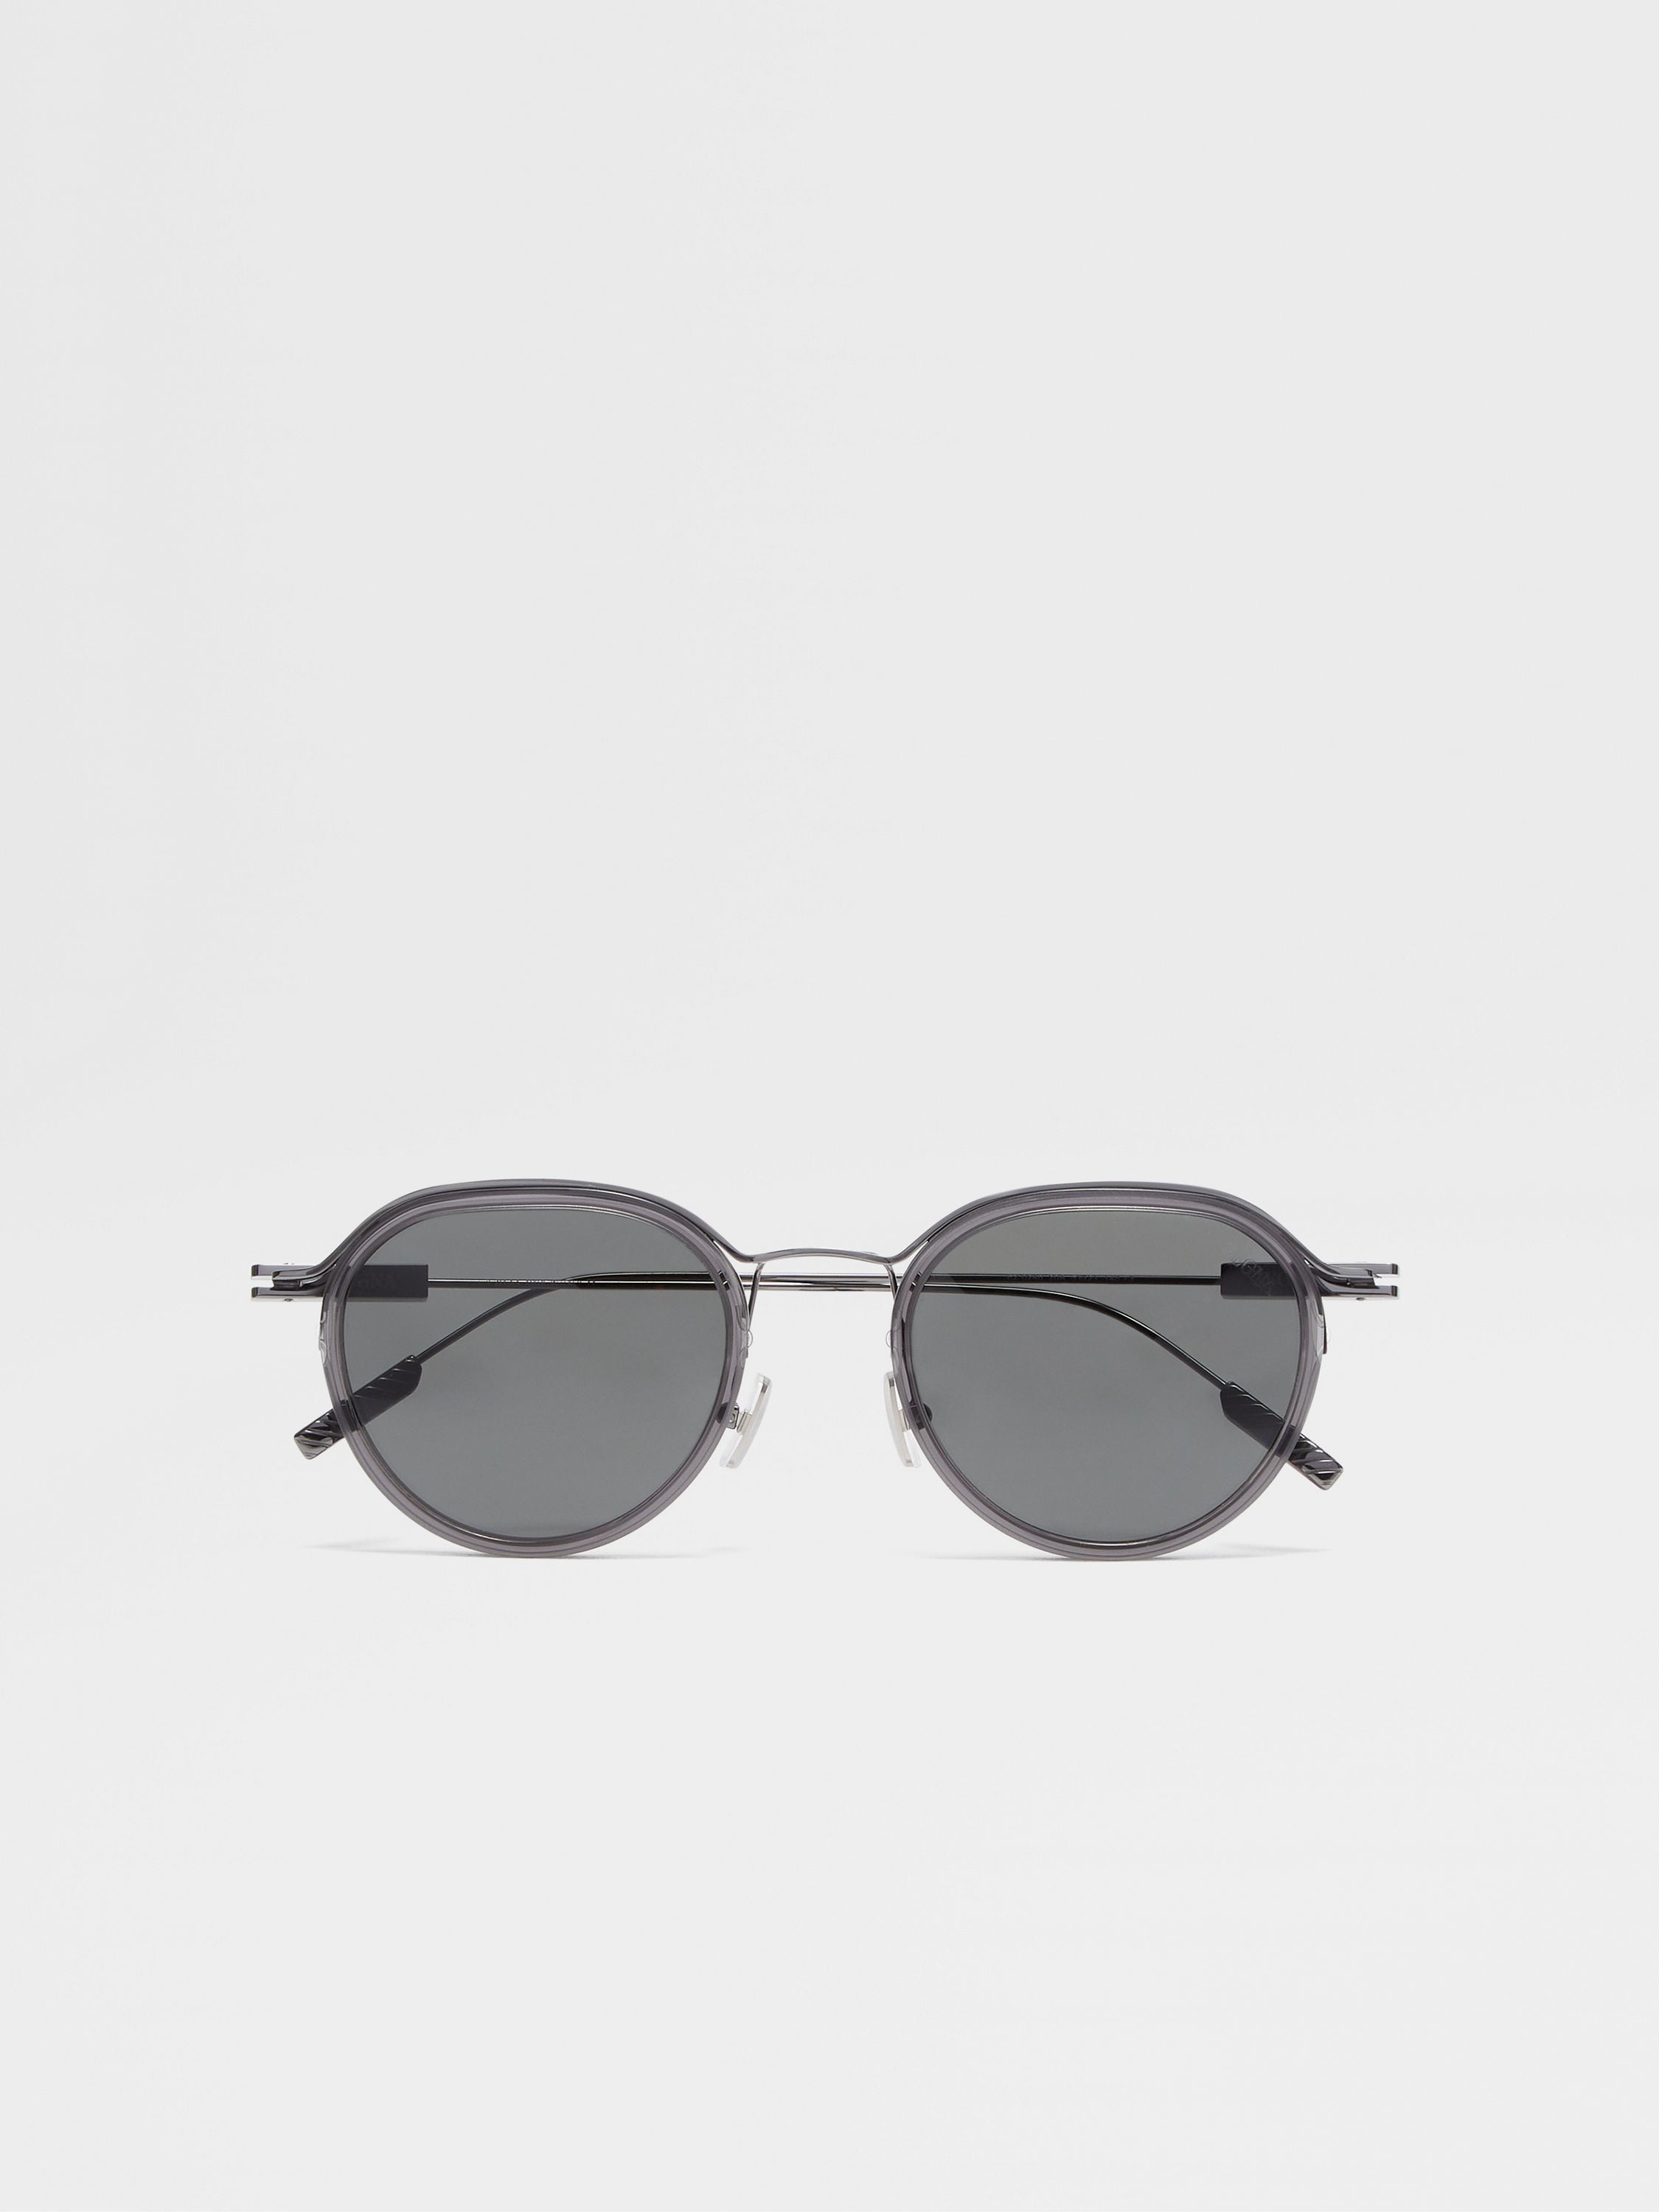 Transparent Grey and Dark Ruthenium Acetate and Metal Sunglasses